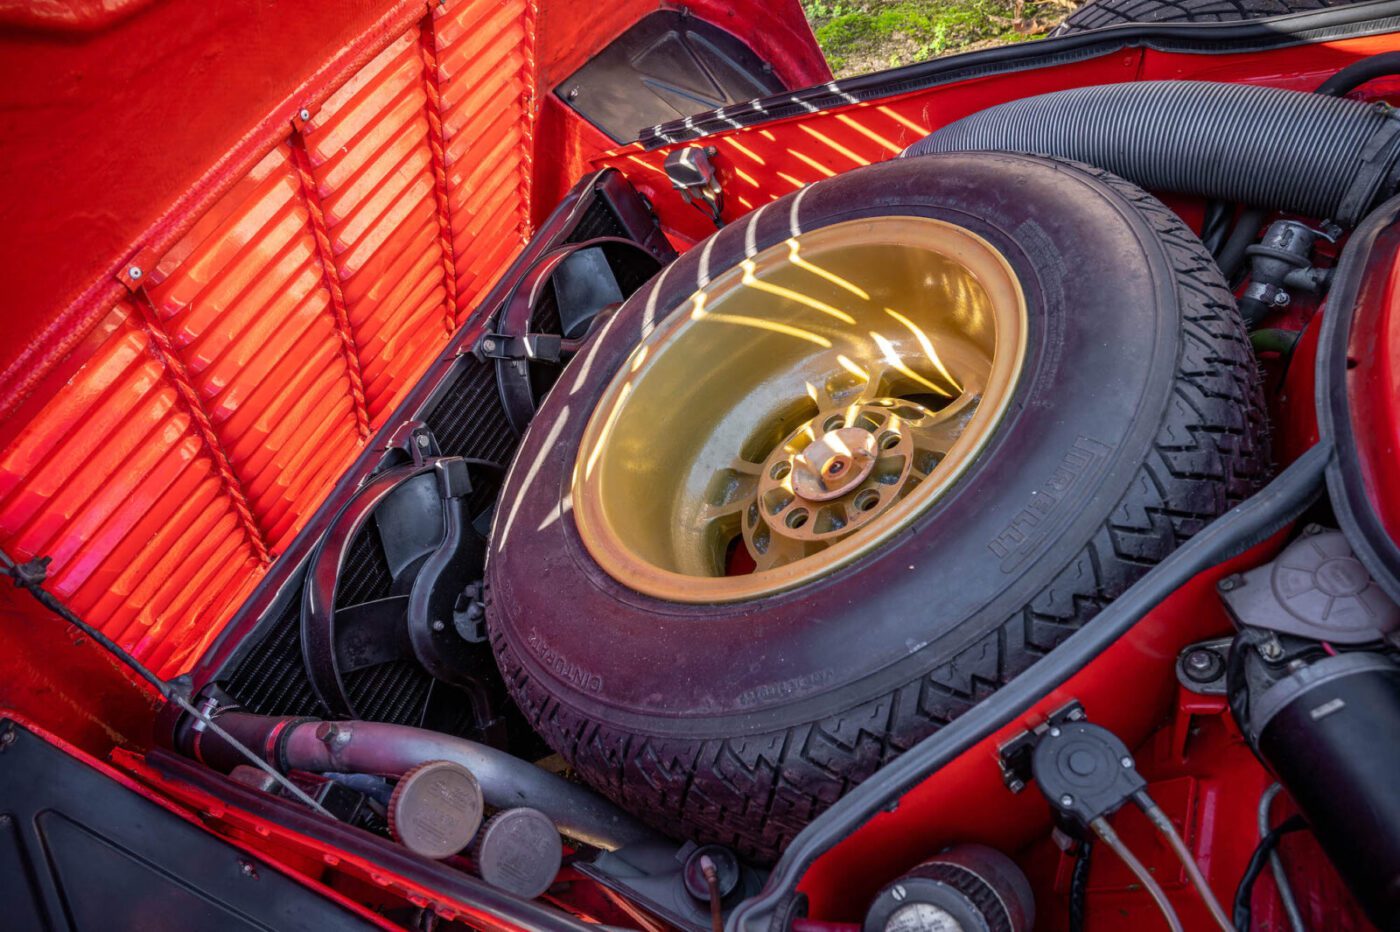 Lancia Stratos spare wheel